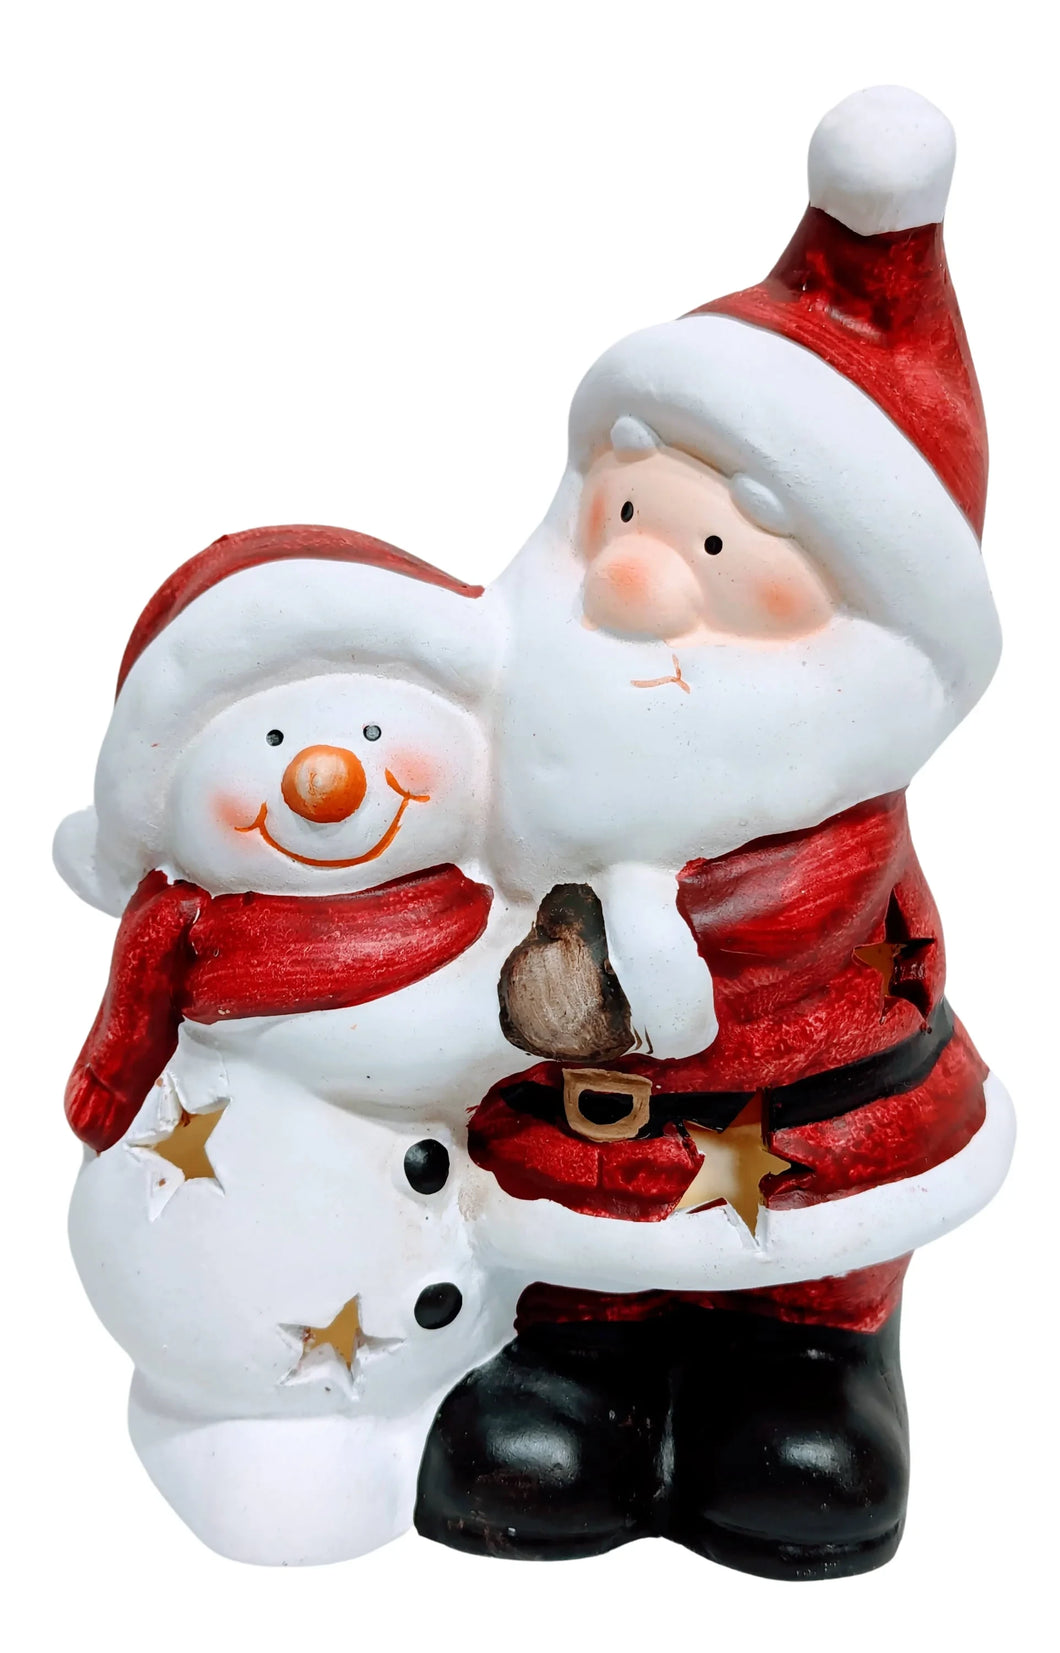 Ceramic Light Up Santa with Snowman Figurine